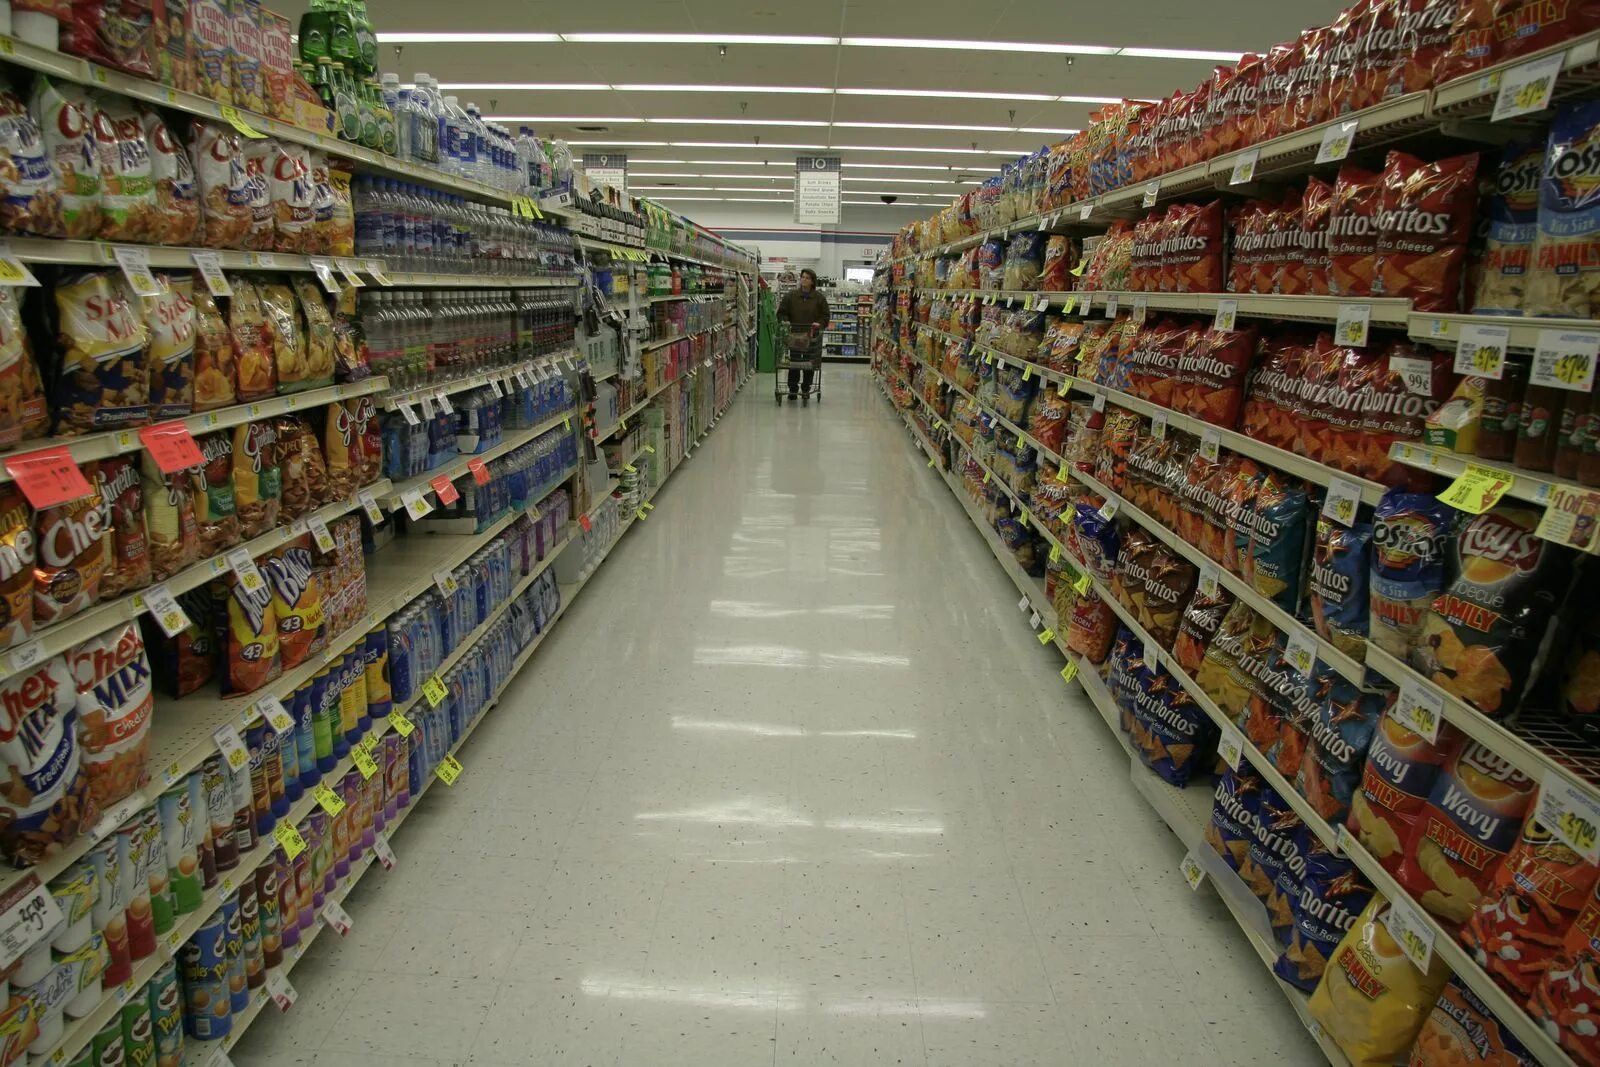 Markets shop ru. Grocery aisle продукты. Бакалея ассортимент товаров. Супермаркет ряды. Supermarket aisle.